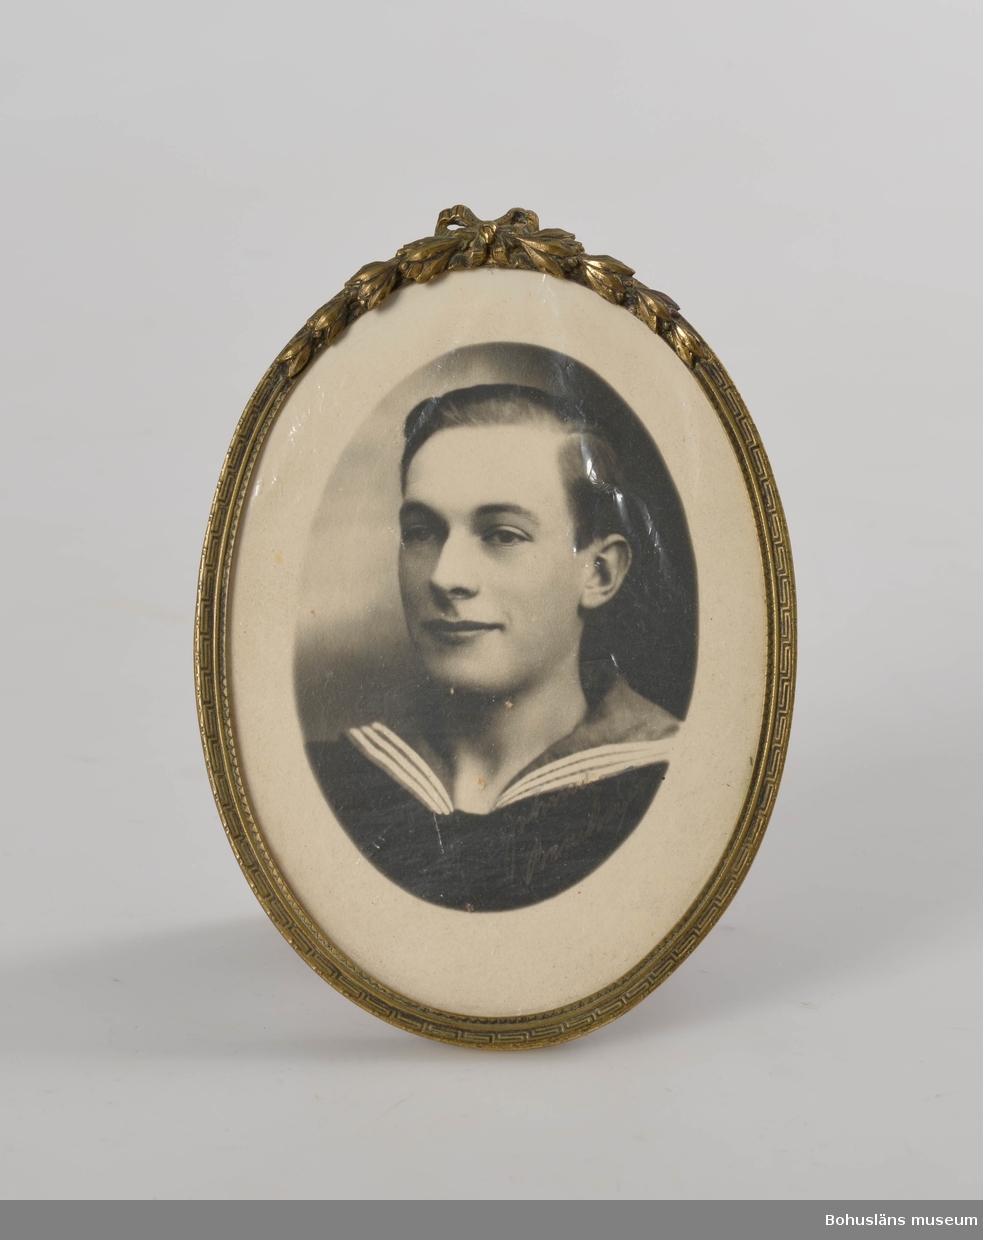 Svartvitt fotografi inramat i oval fotoram av gulmetall. 
Motiv: Carl Gustaf Bernhardson i sjömanskrage.